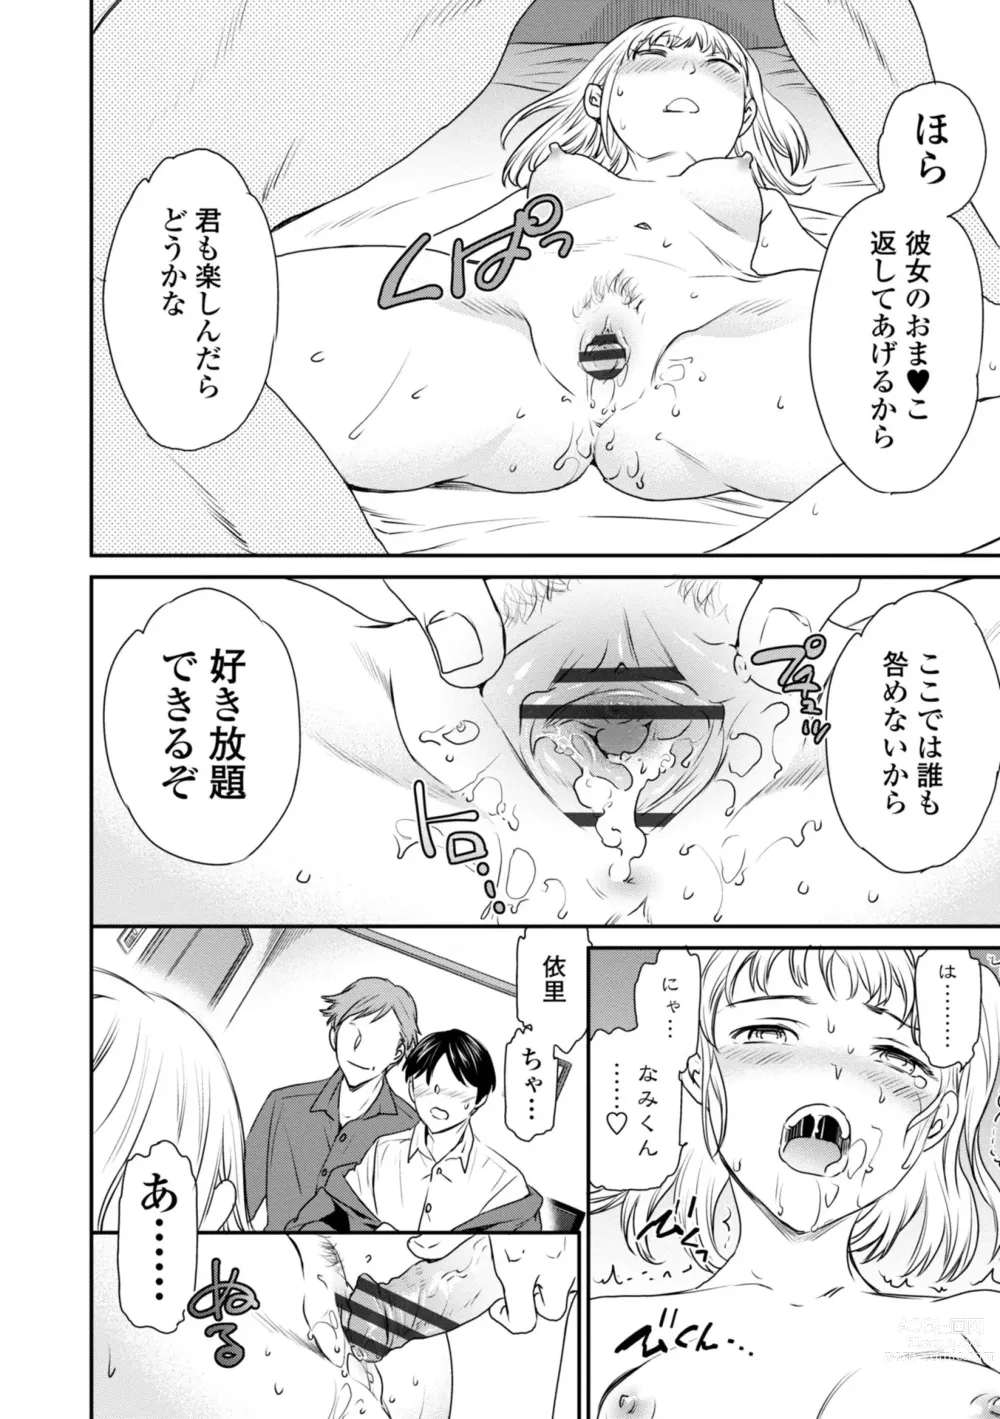 Page 24 of manga Virginity